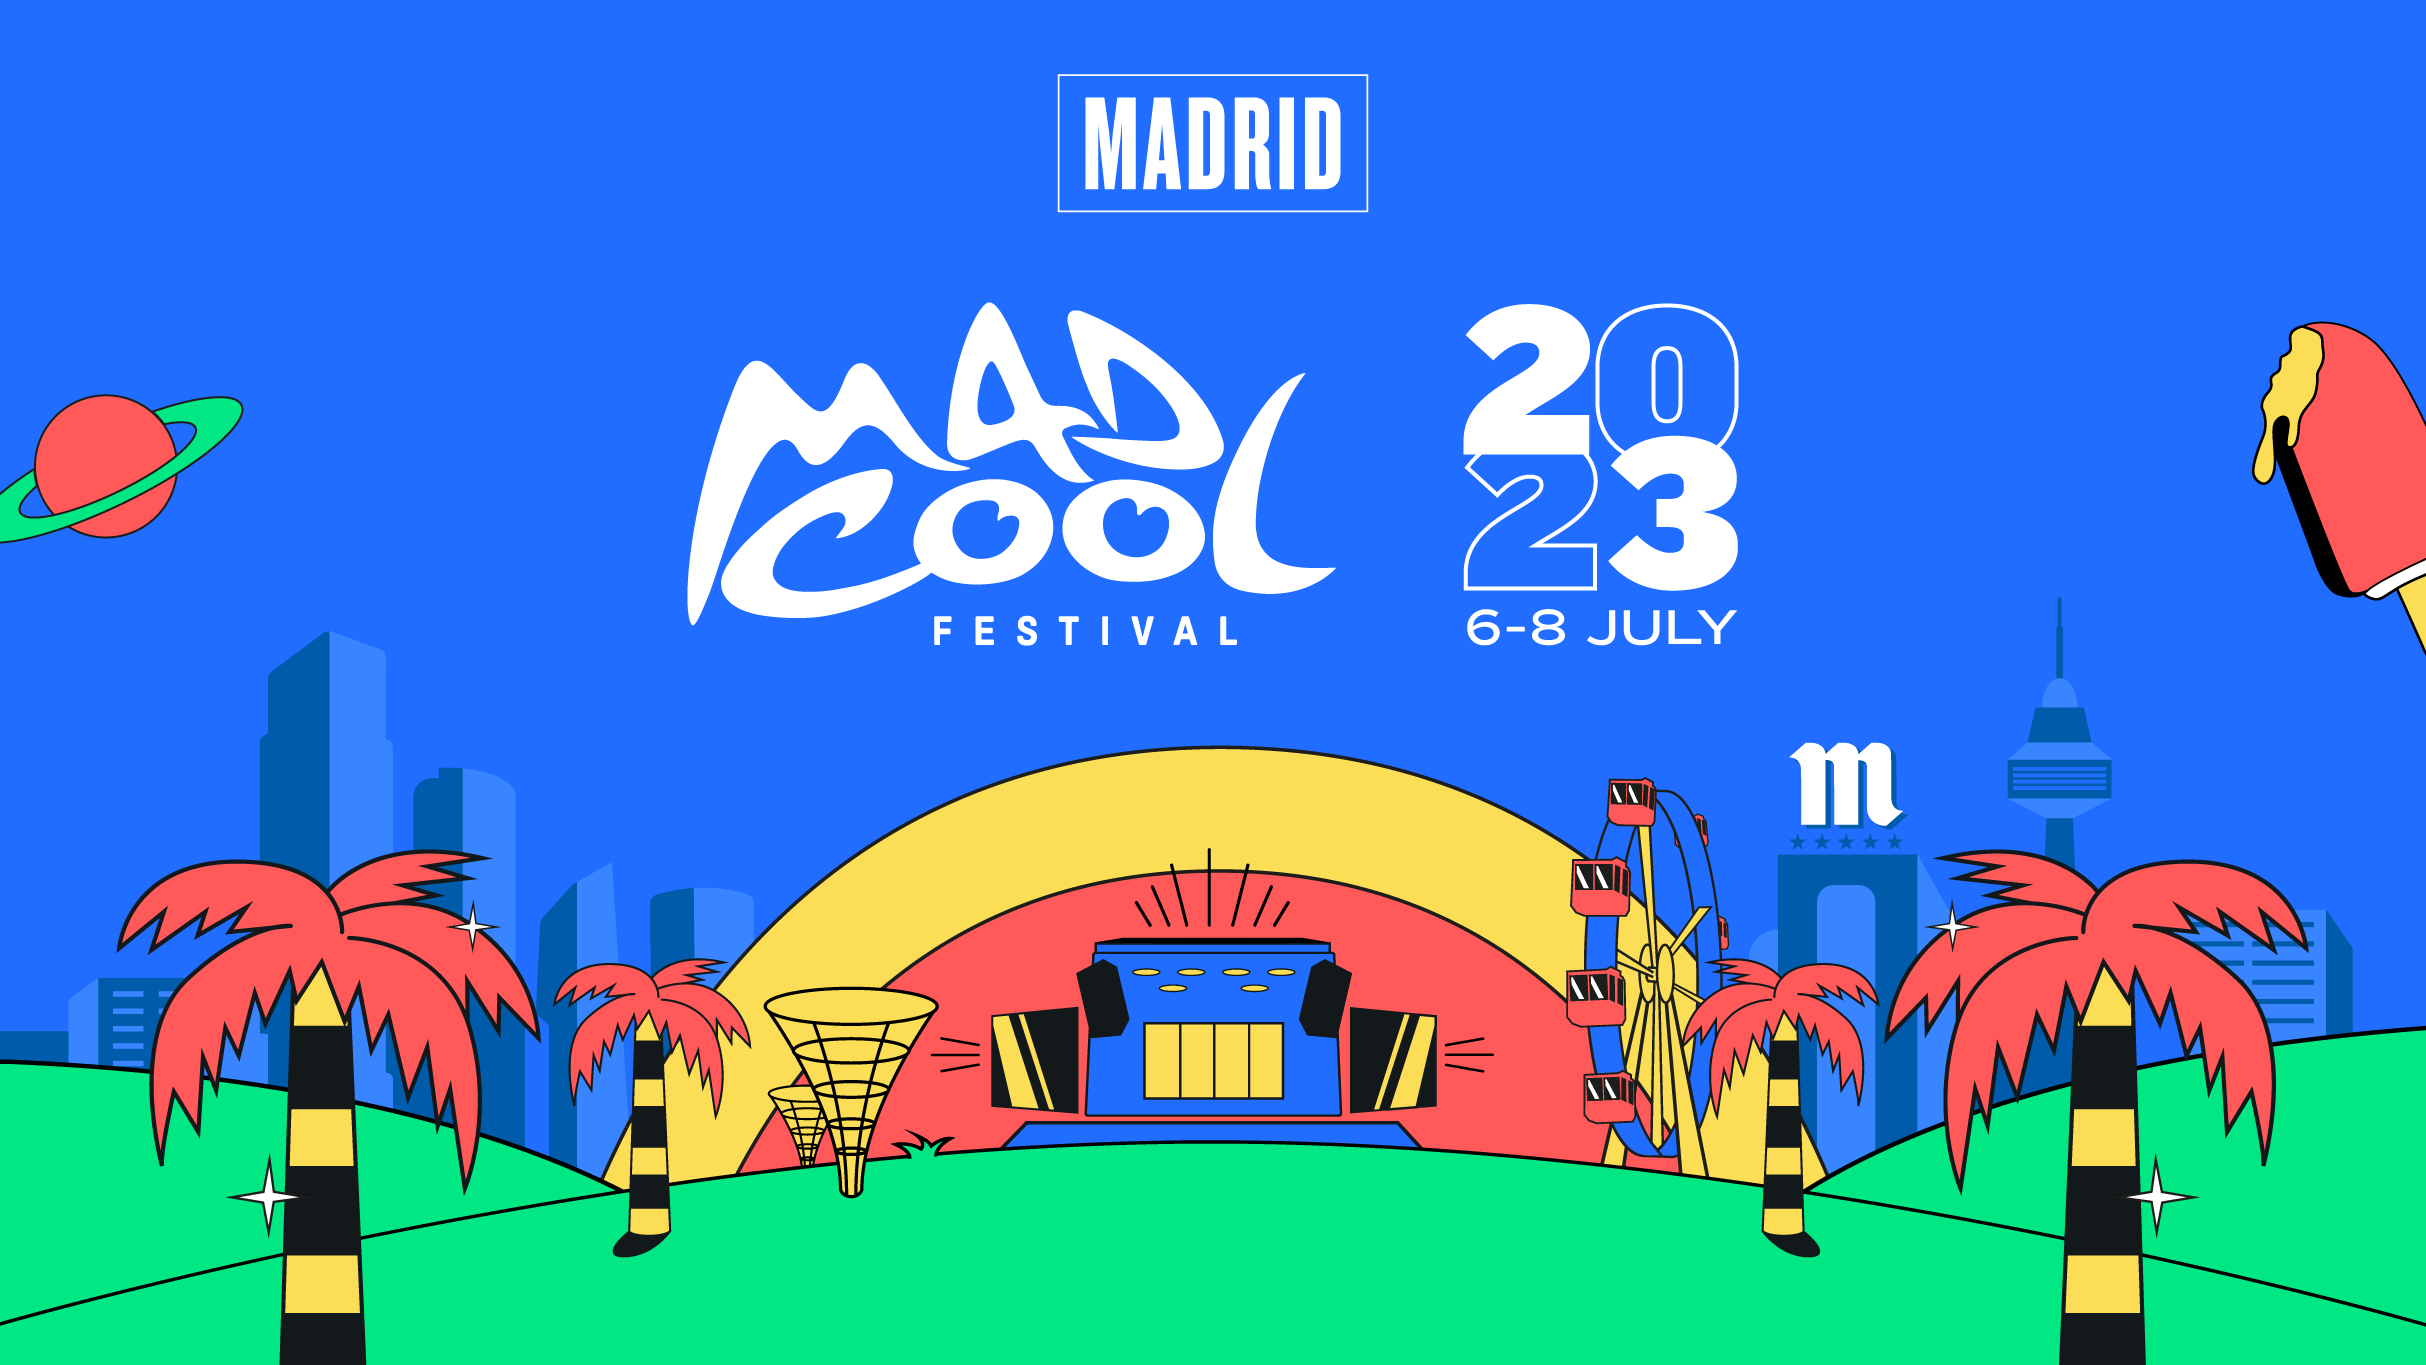 Imagen del Mad Cool Festival 2023 con fechas